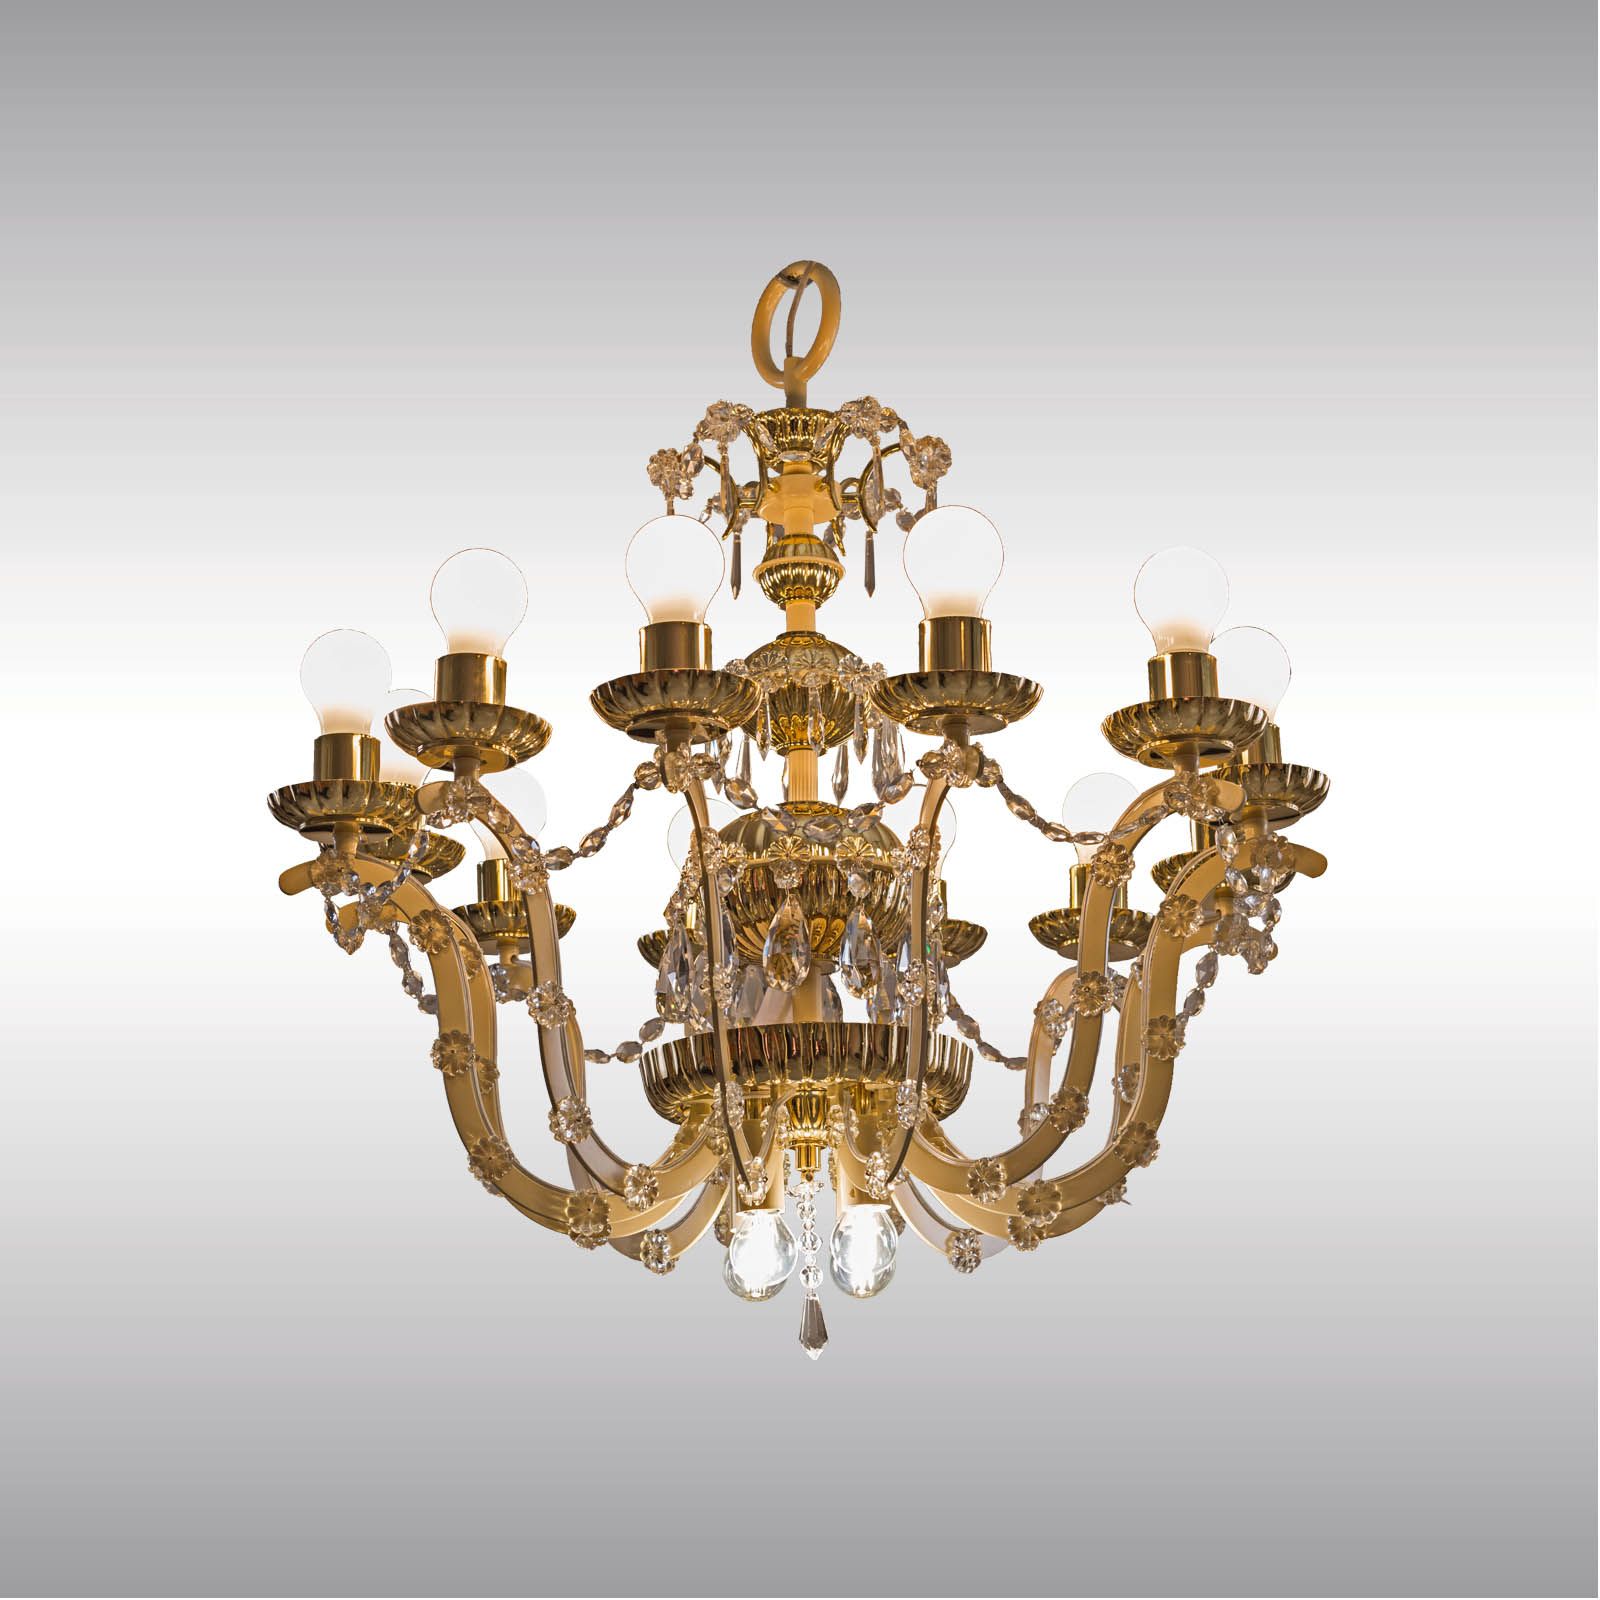 WOKA LAMPS VIENNA - OrderNr.: 80080|Magnificent WOKA Chandelier mid century modern - Design: WOKA